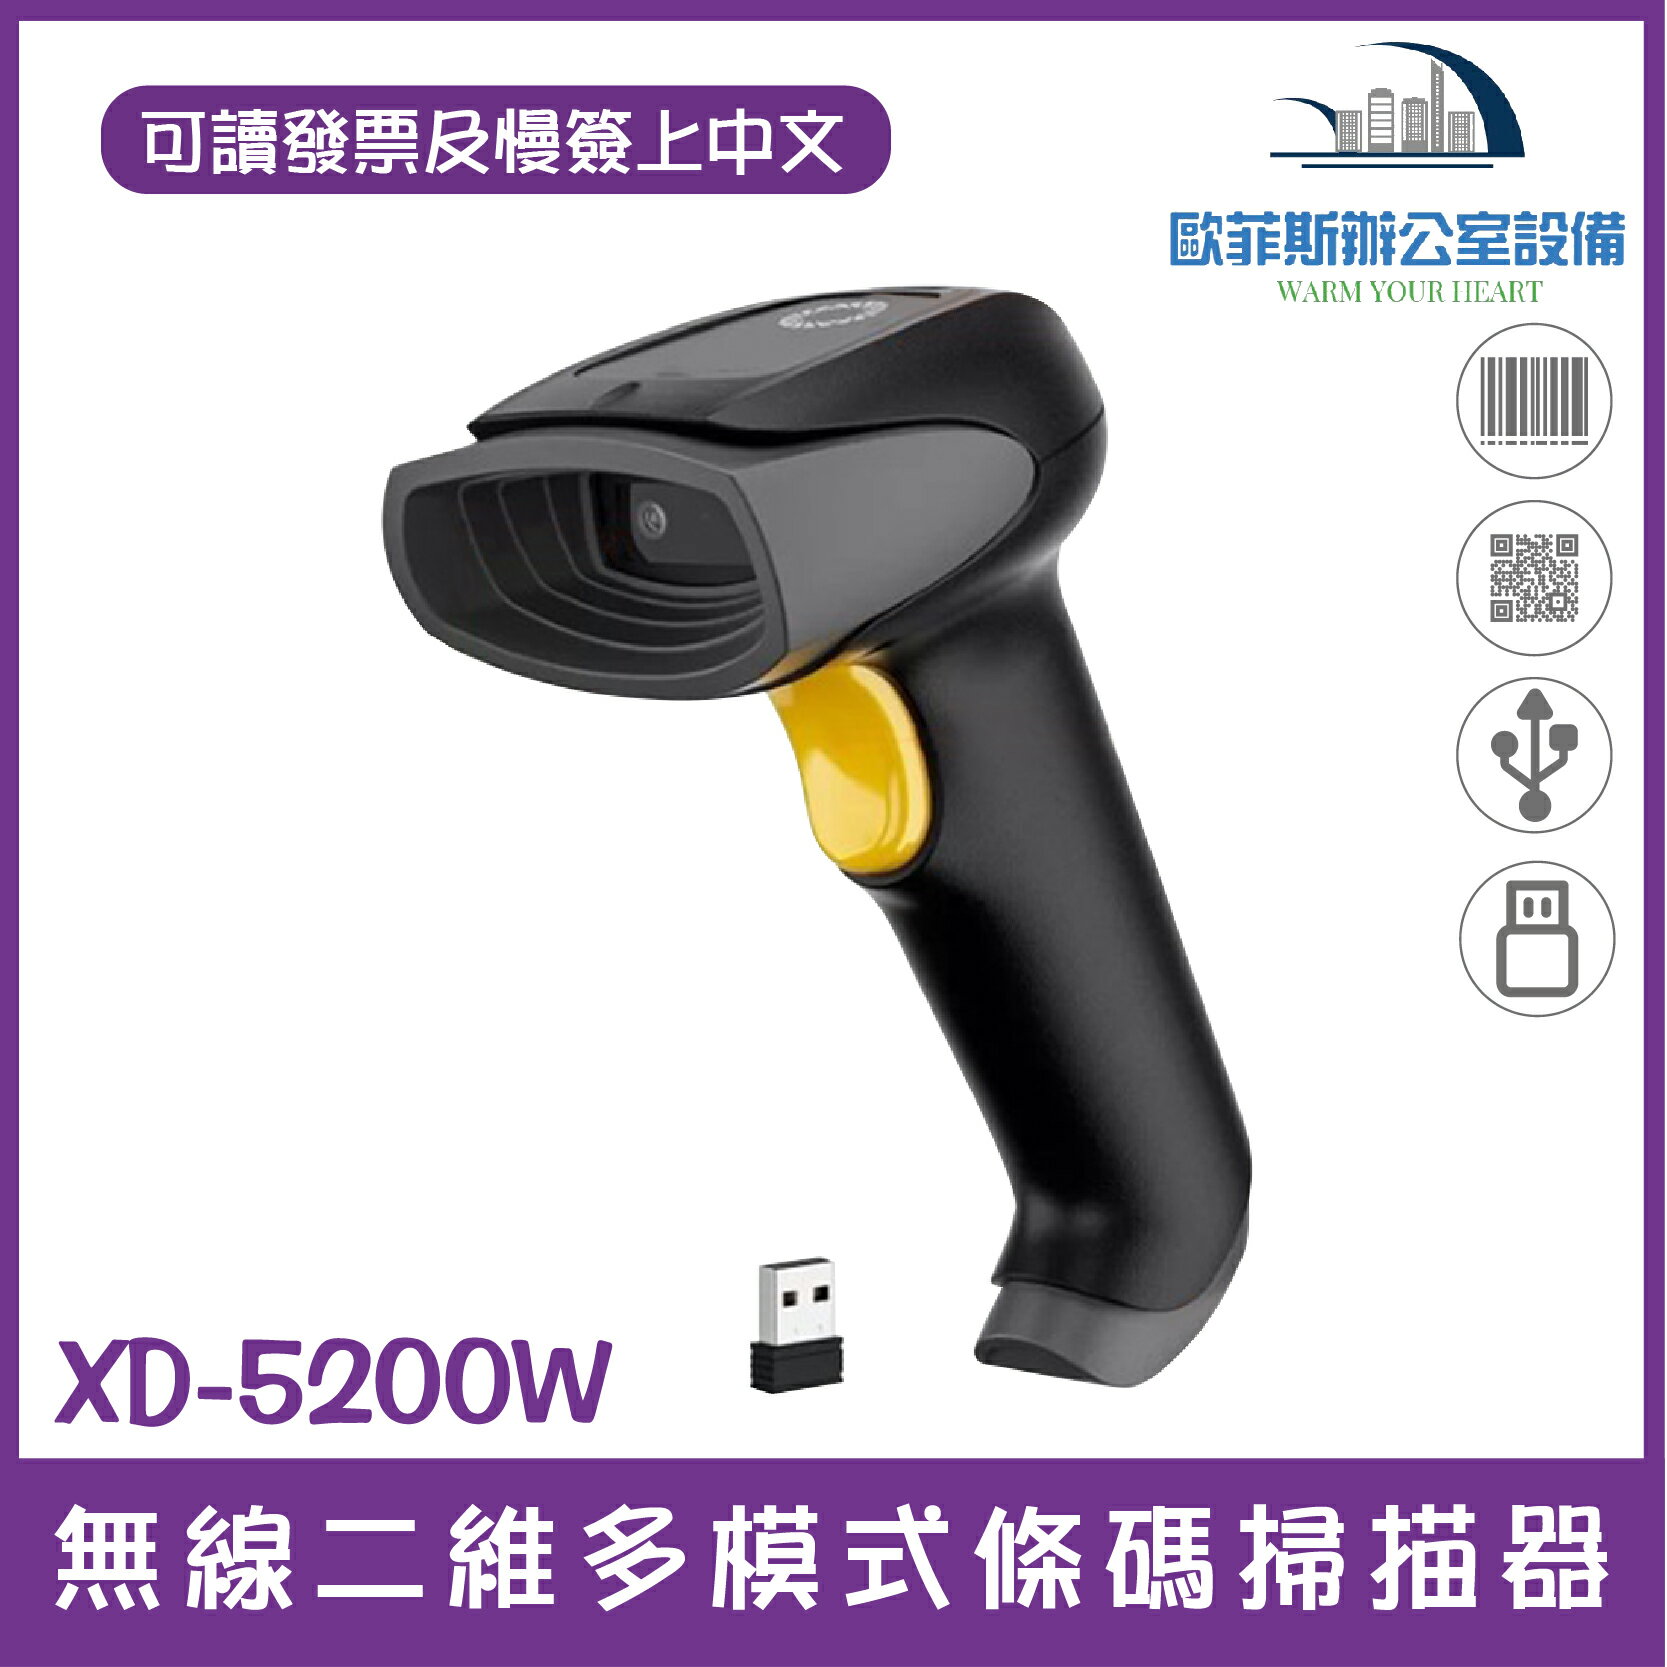 XD-5200W 無線二維條碼掃描器 可讀發票上QR CODE顯示中文 行動支付 手機條碼 USB介面 台灣現貨